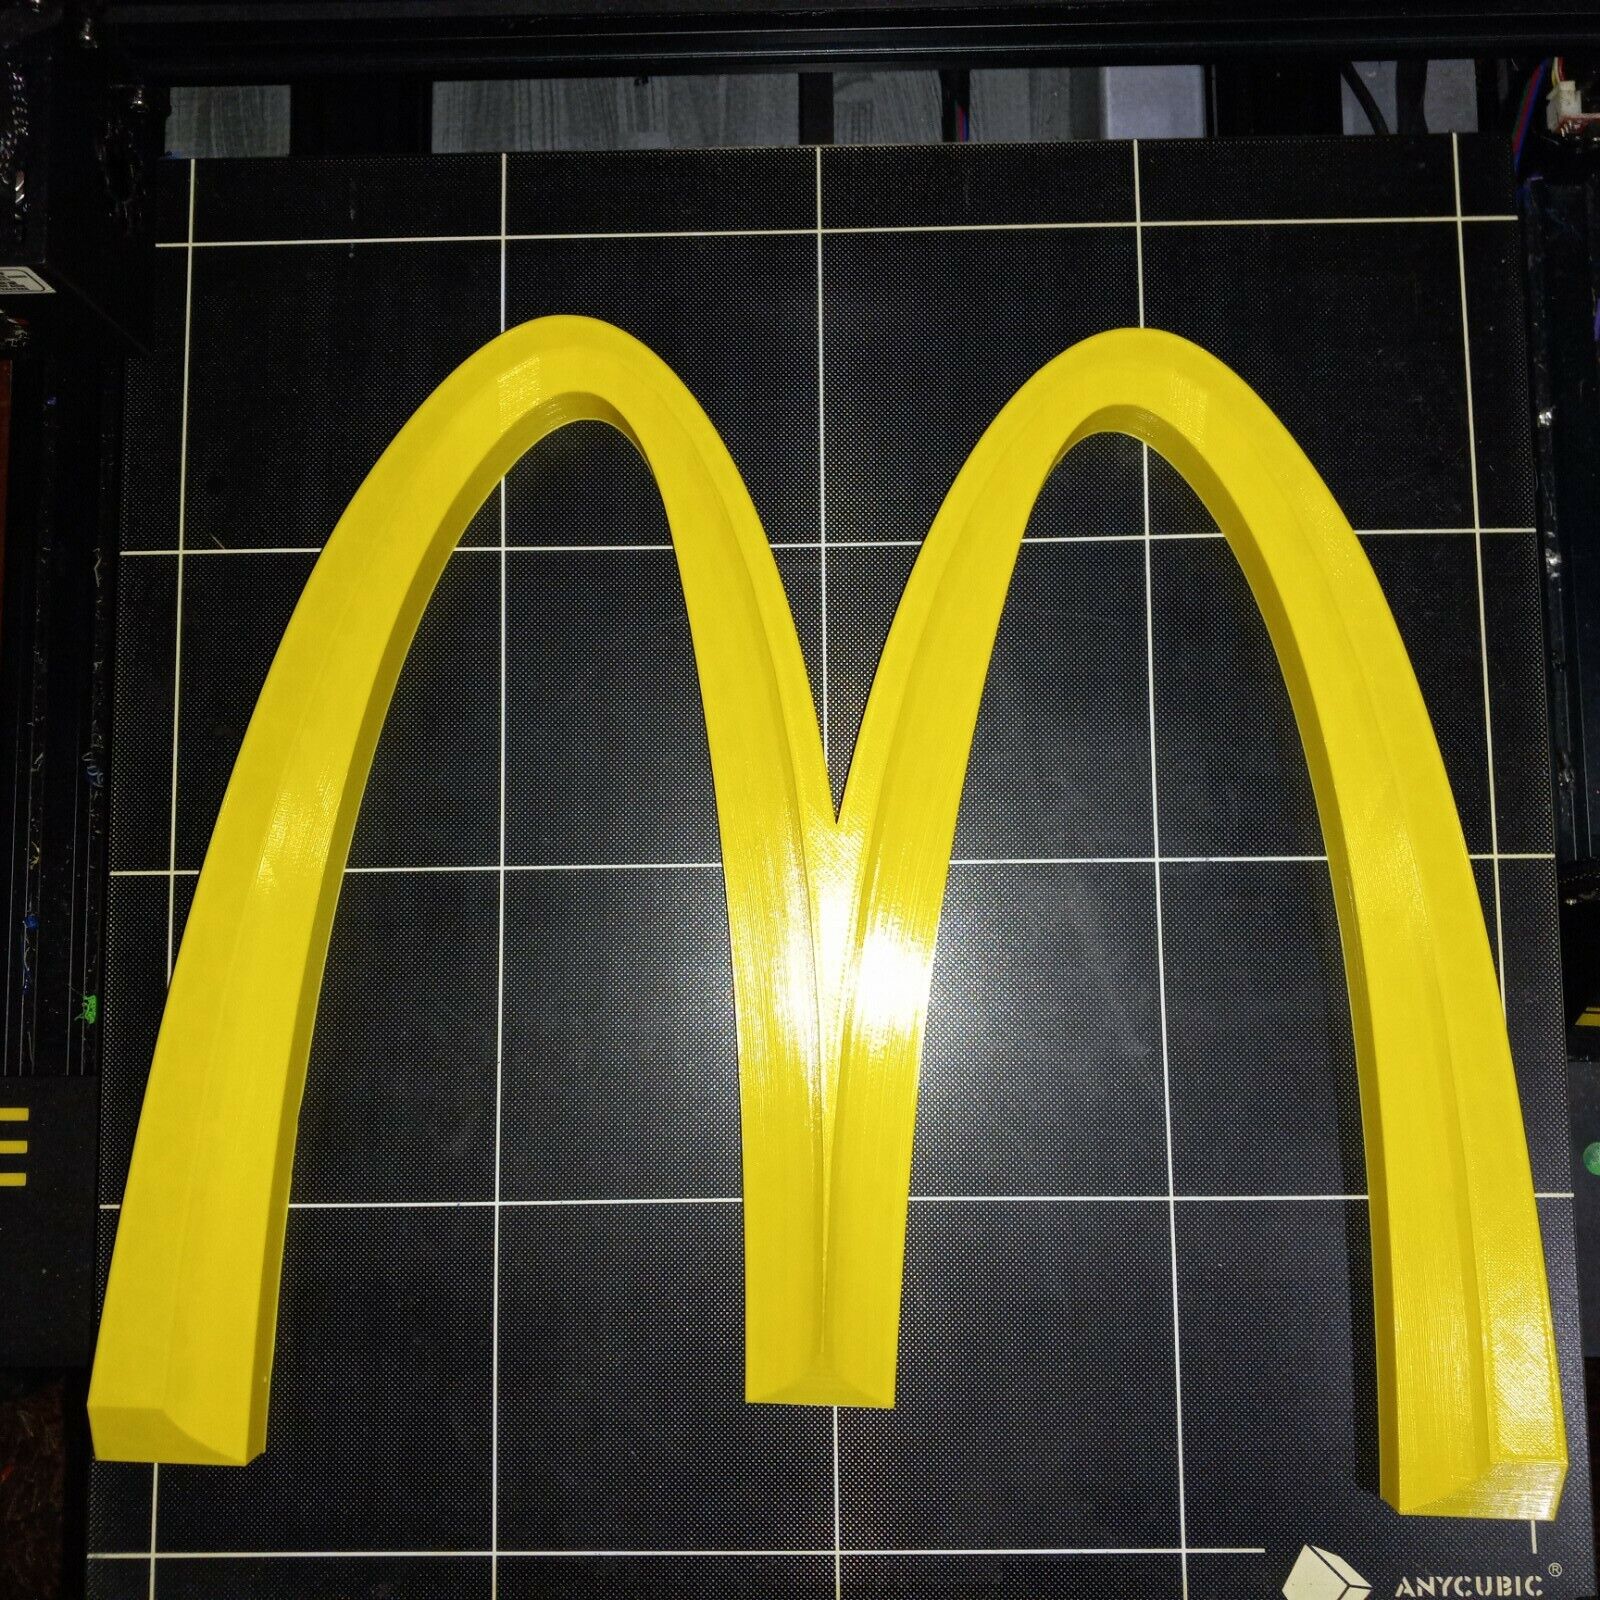 SALE McDonald’s Big “M” 3D Advertising Sign Golden Arches 15\